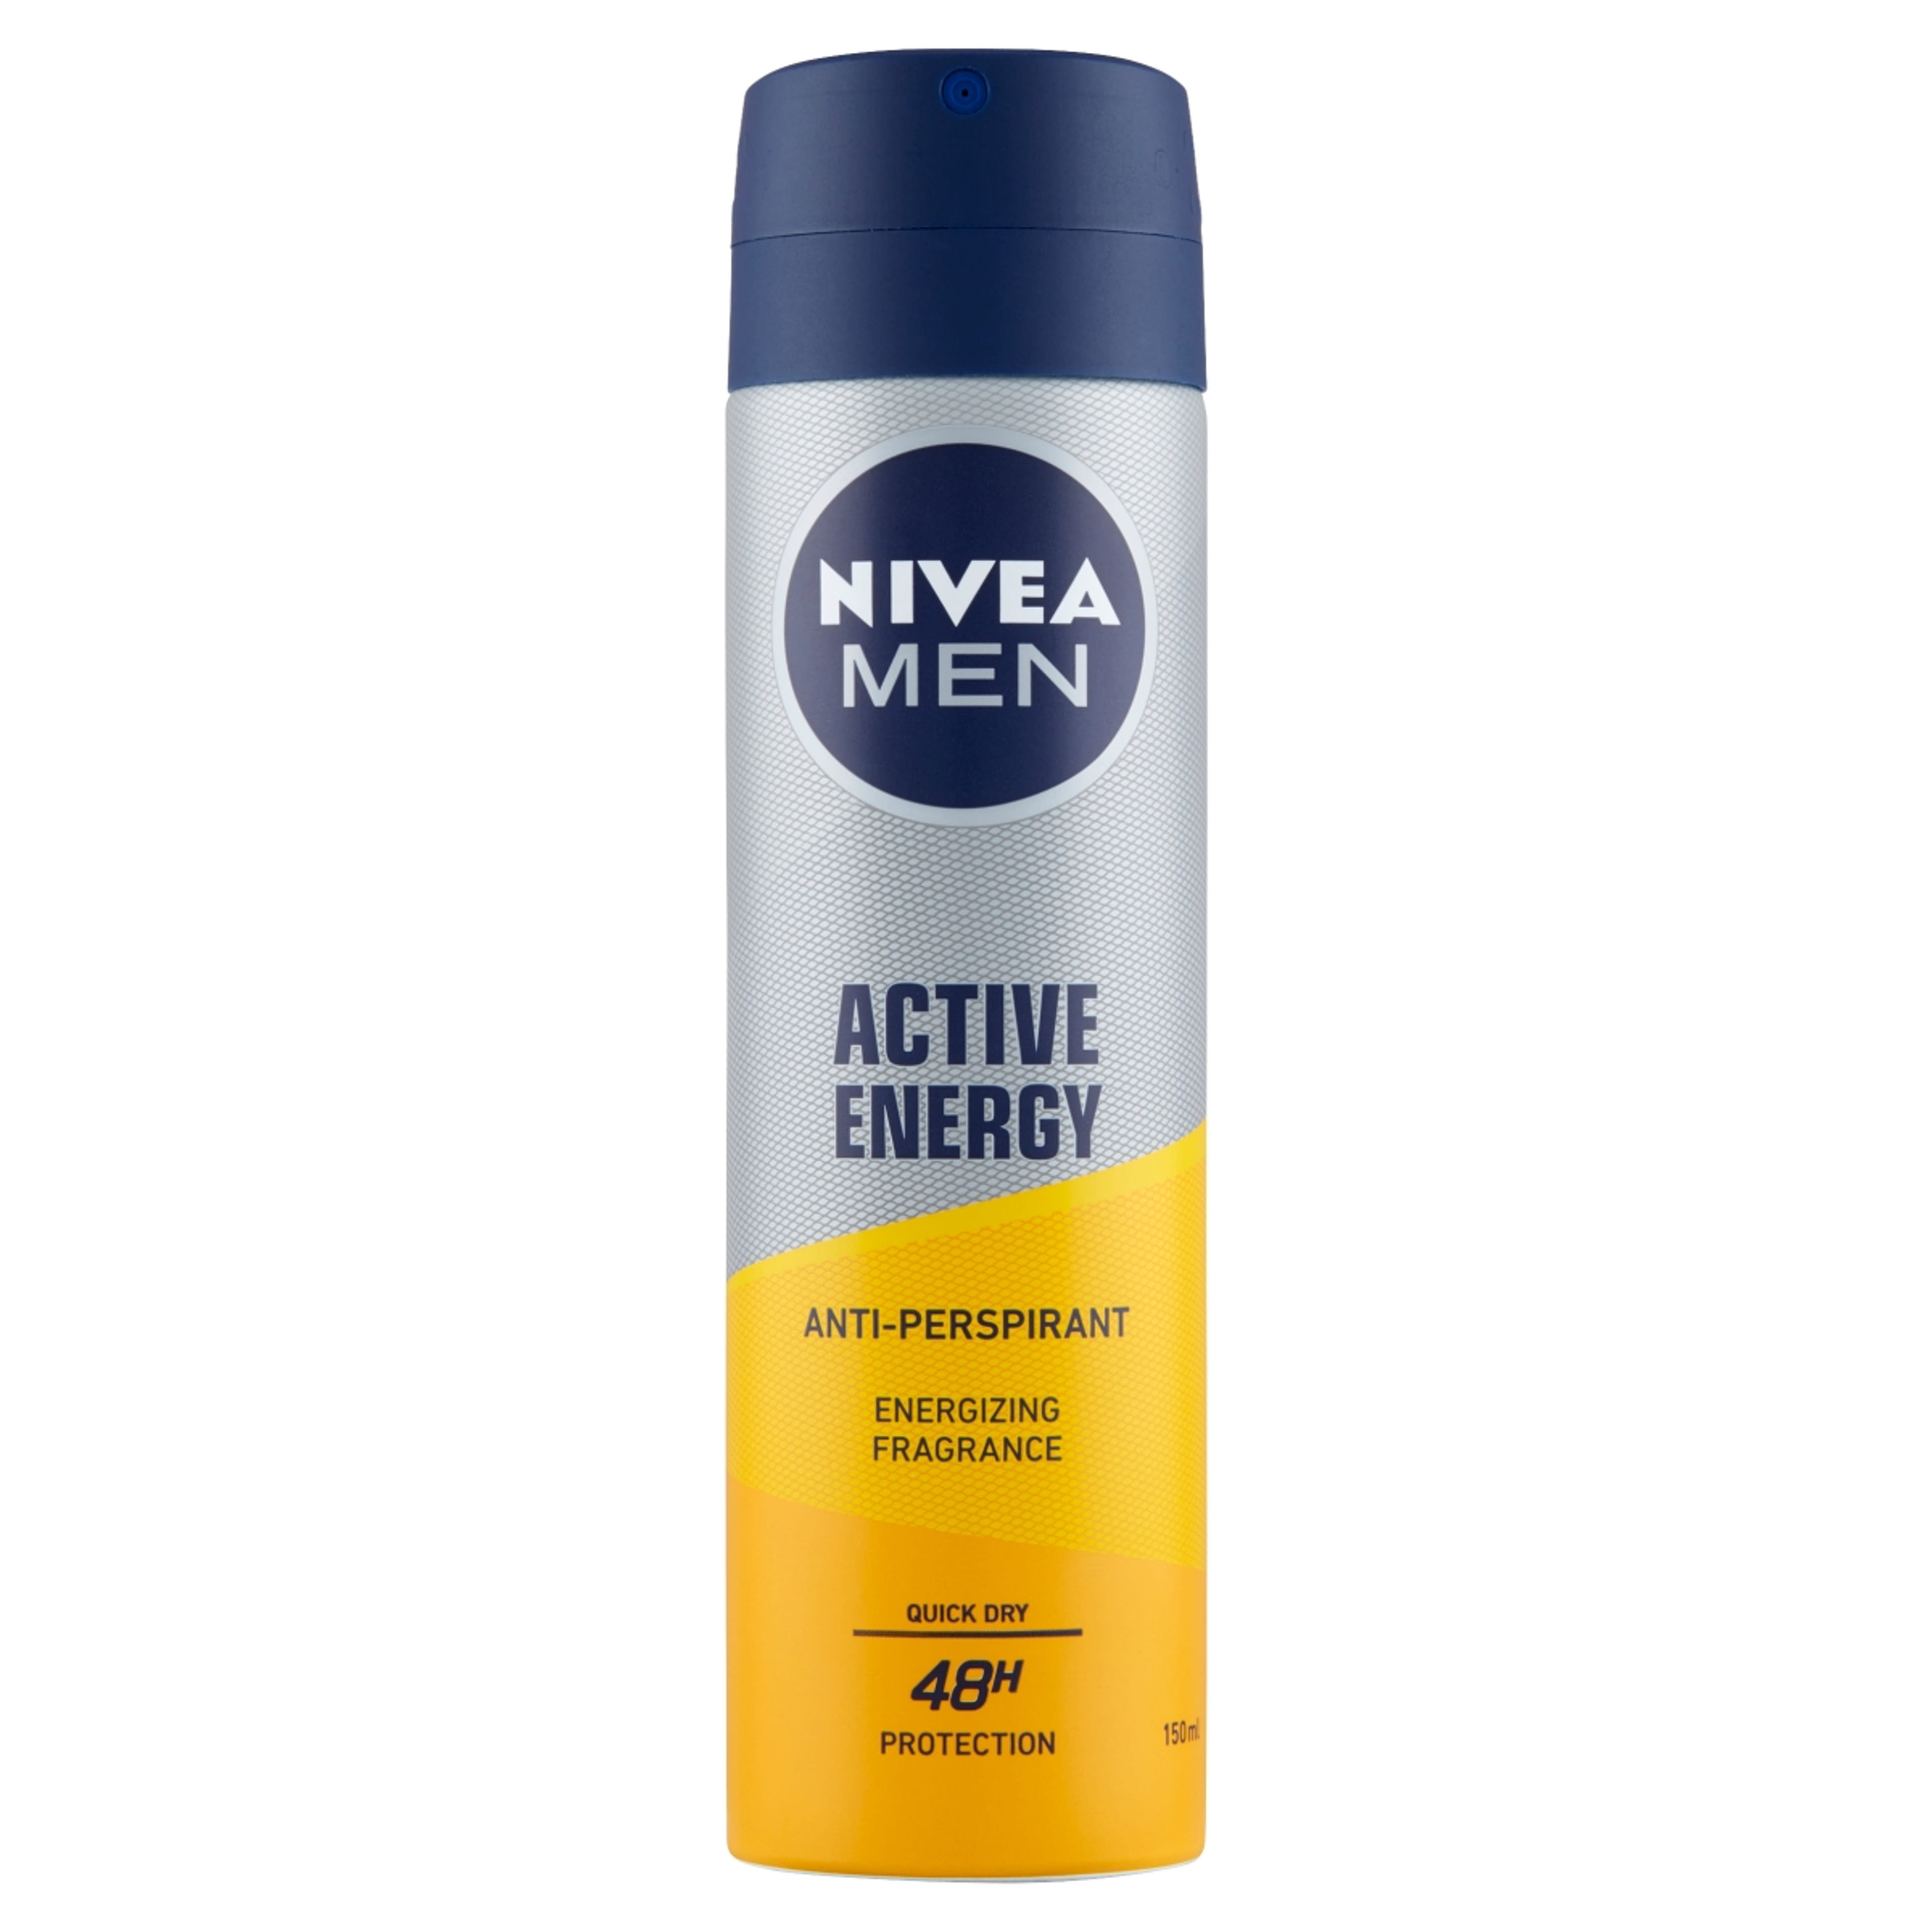 NIVEA MEN deo active energy - 150 ml-1